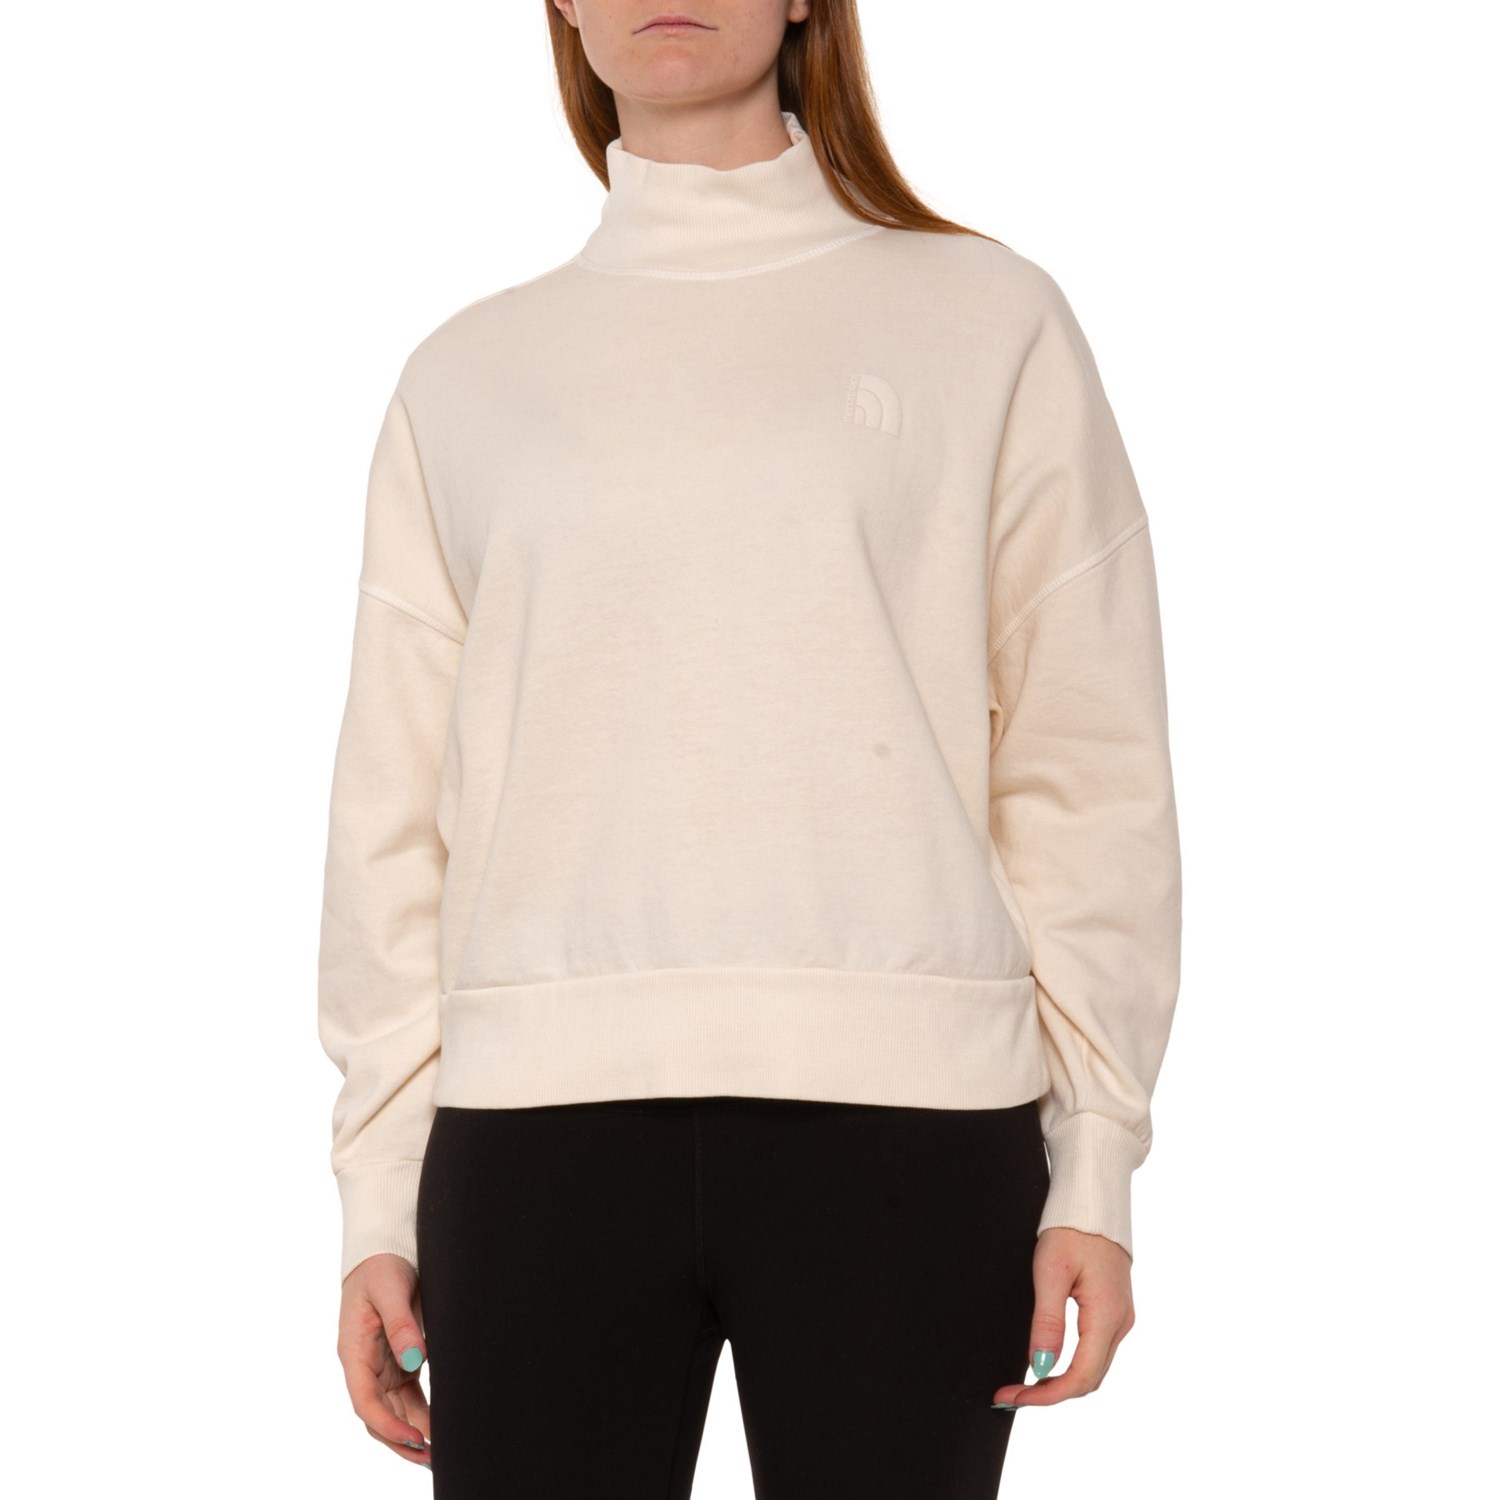 () m[XtFCX K[g_C bN lbN XEFbgVc The North Face Garment-Dyed Mock Neck Sweatshirt Gardenia White